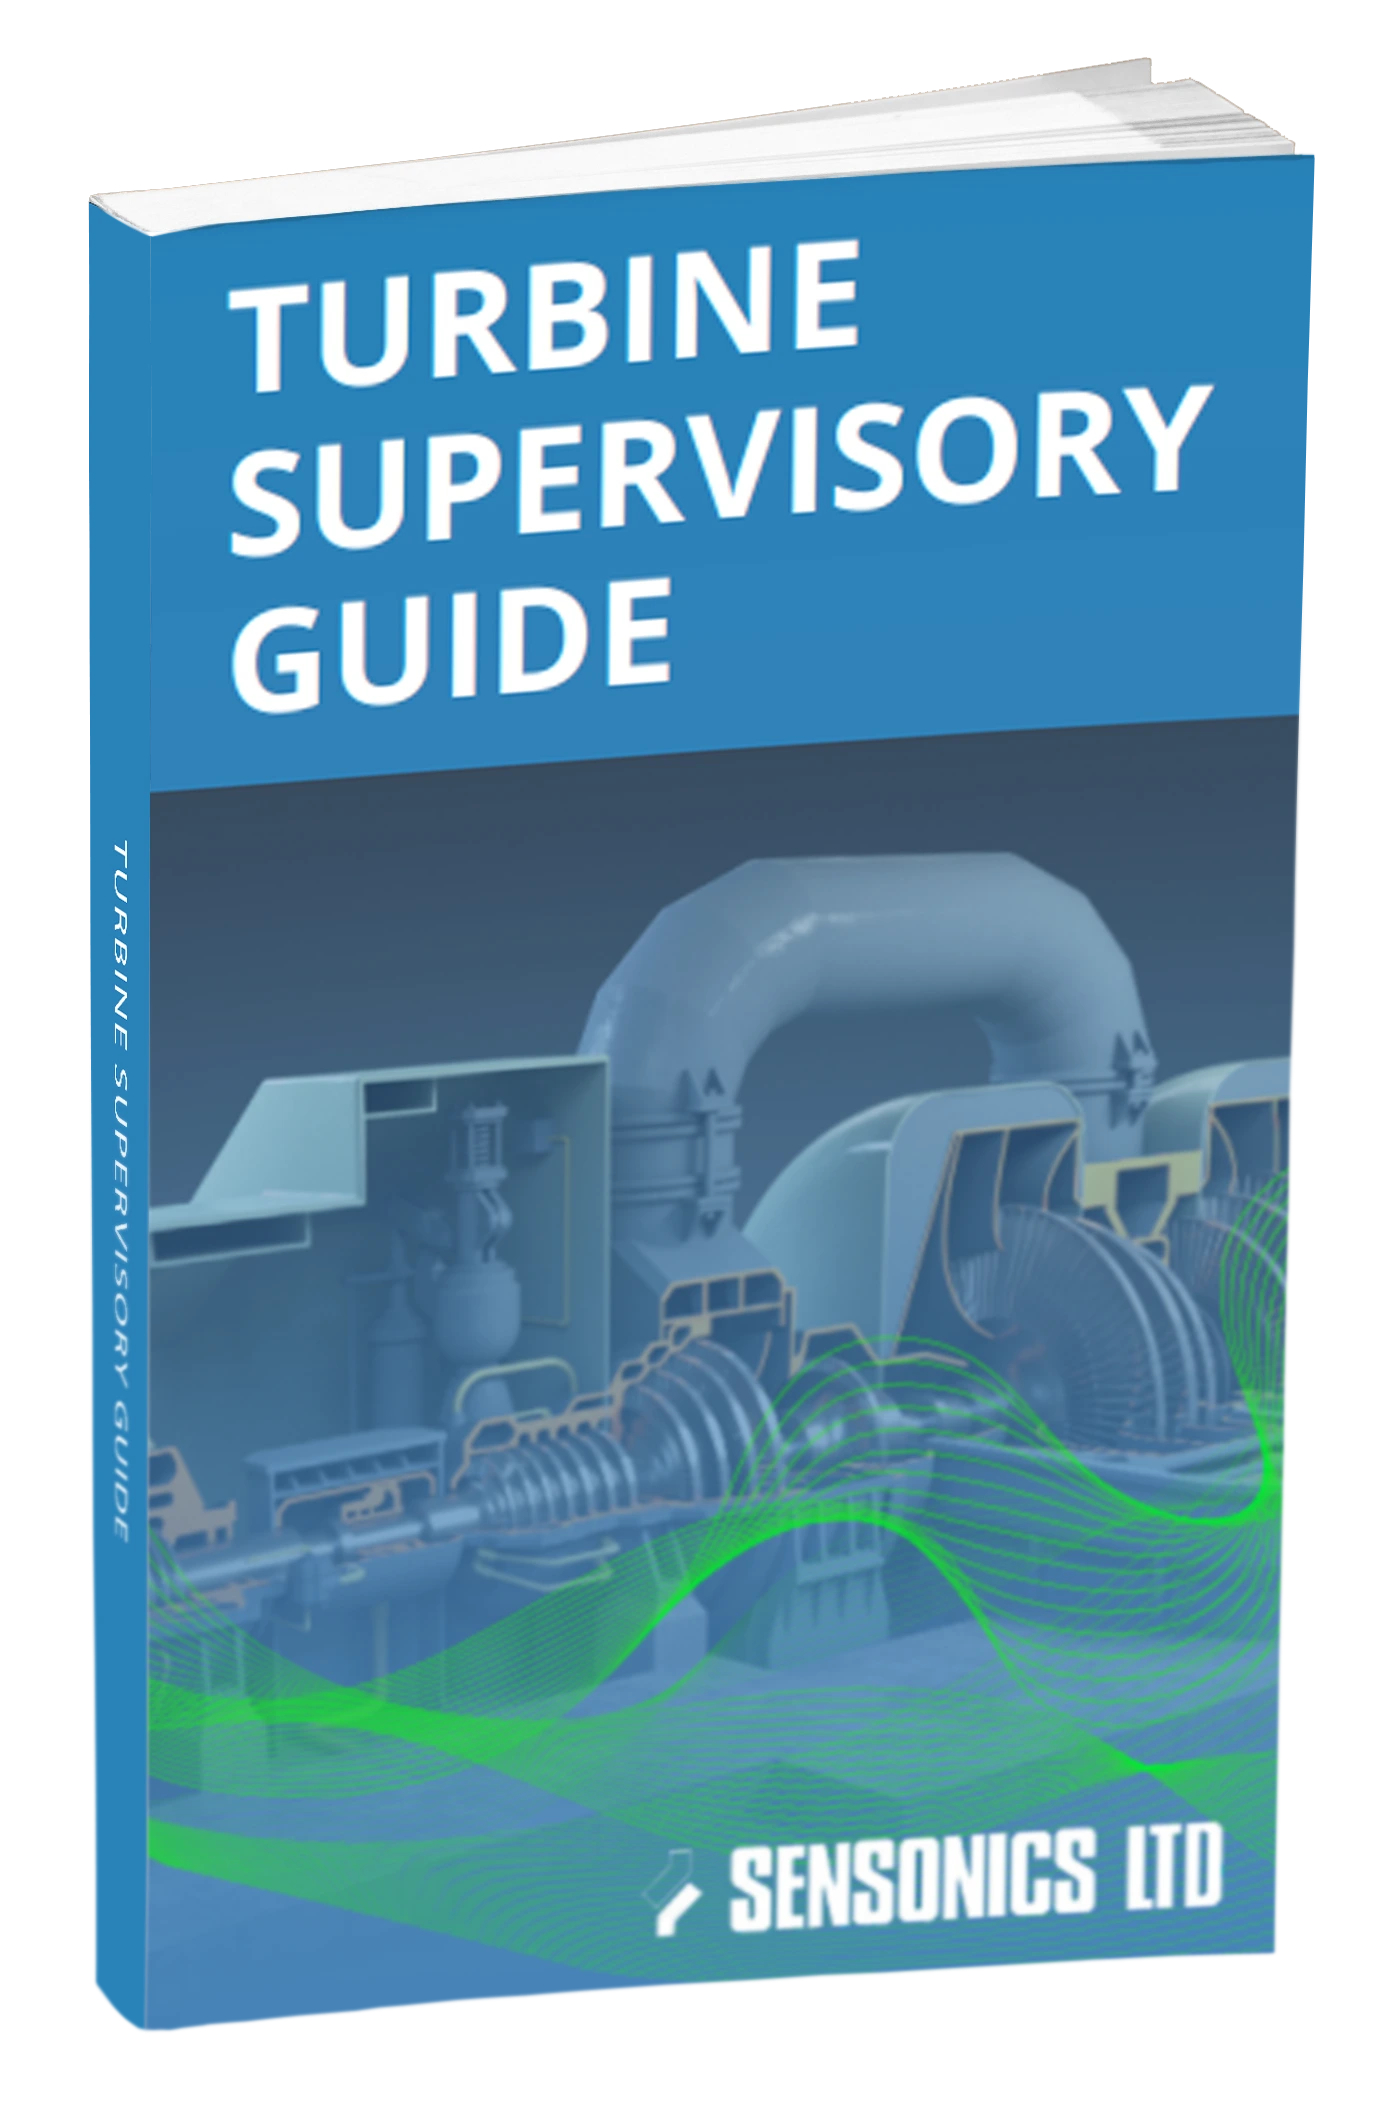 Turbine Supervisory Guide